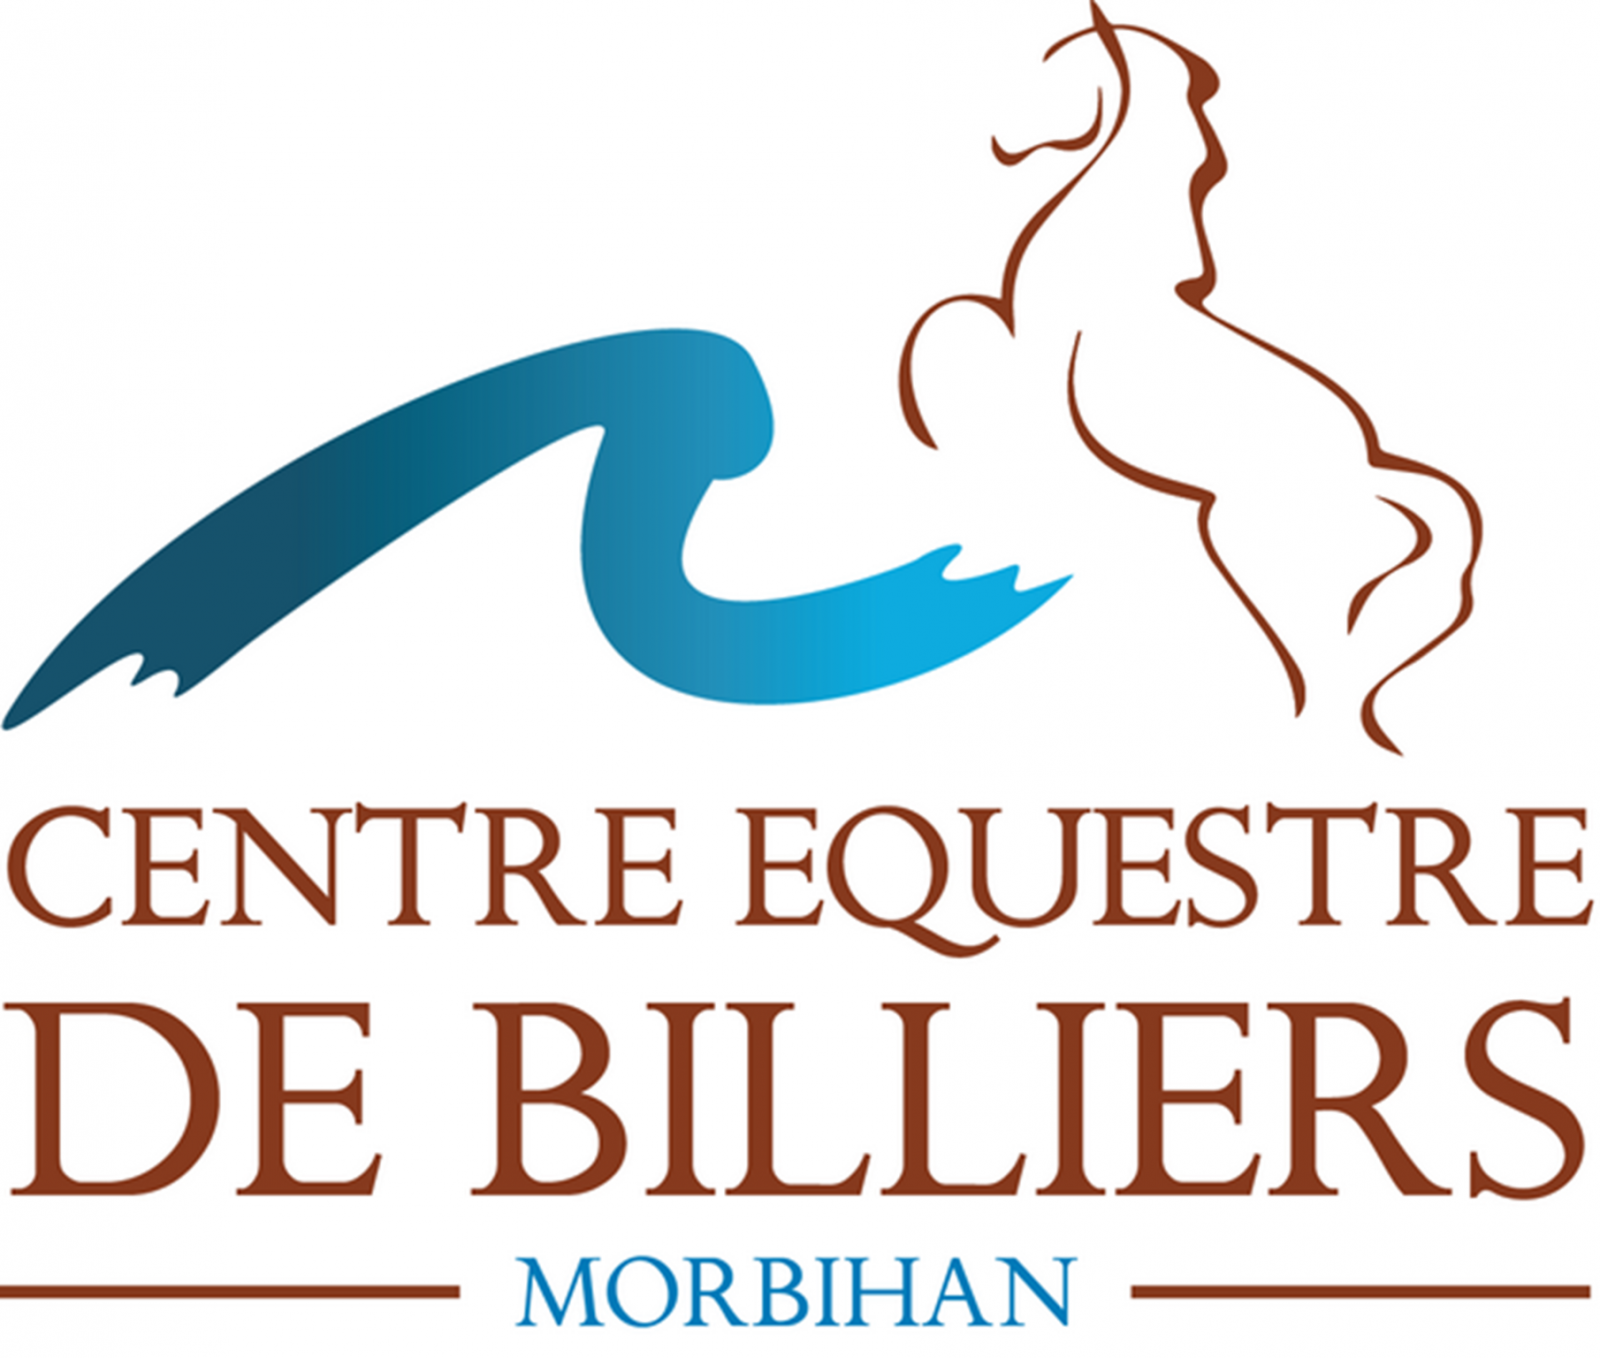 Centre équestre de Billiers Morbihan